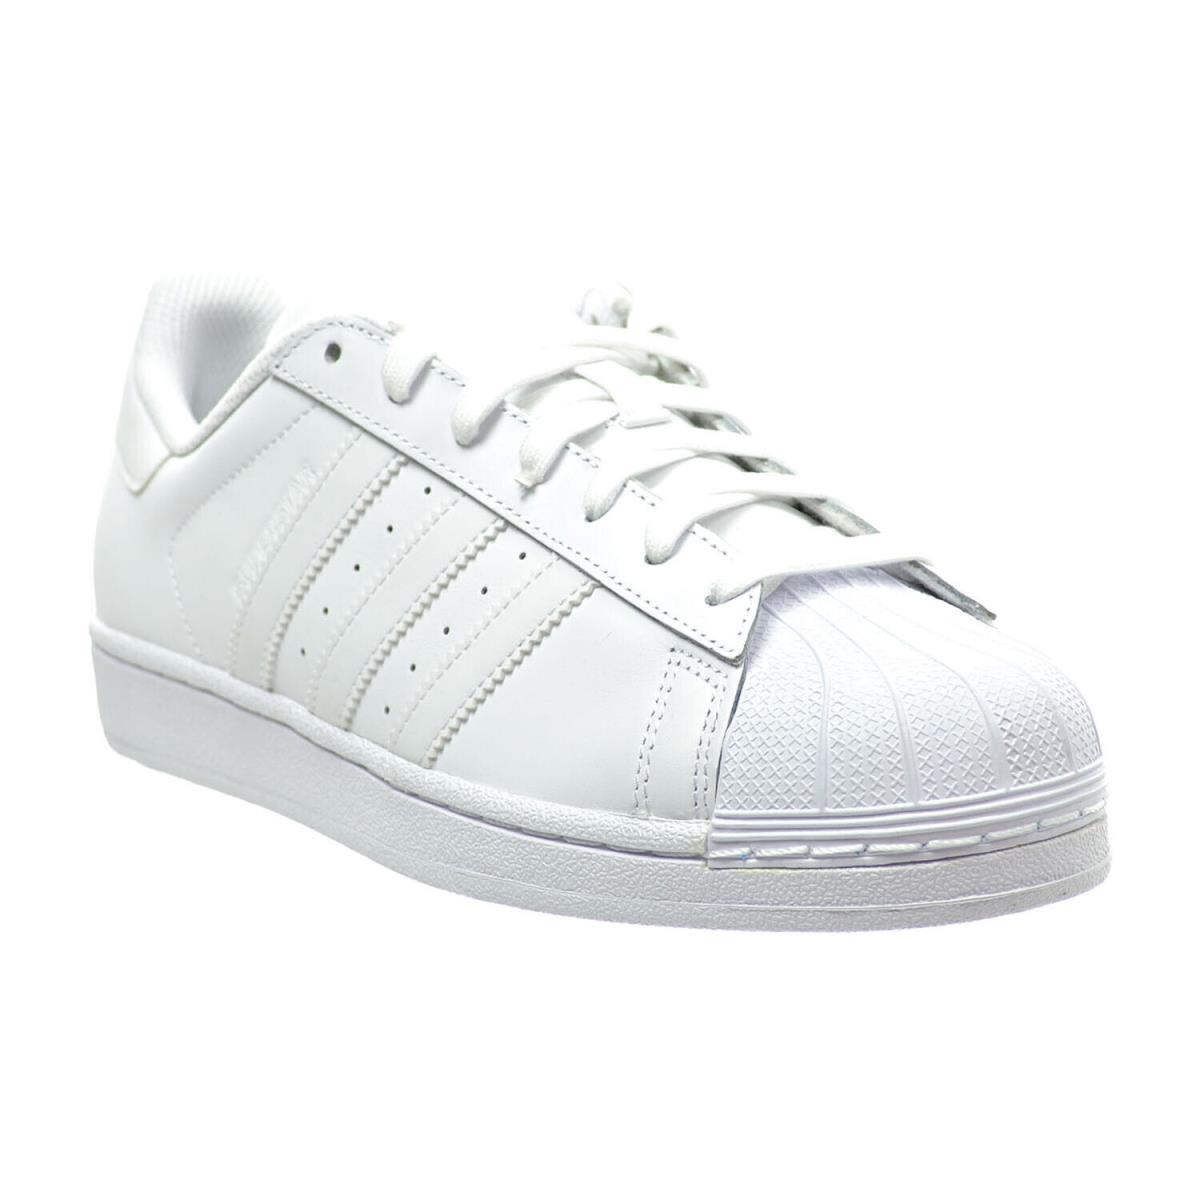 Adidas Superstar W Women`s Basketball Shoes White s85139 - White